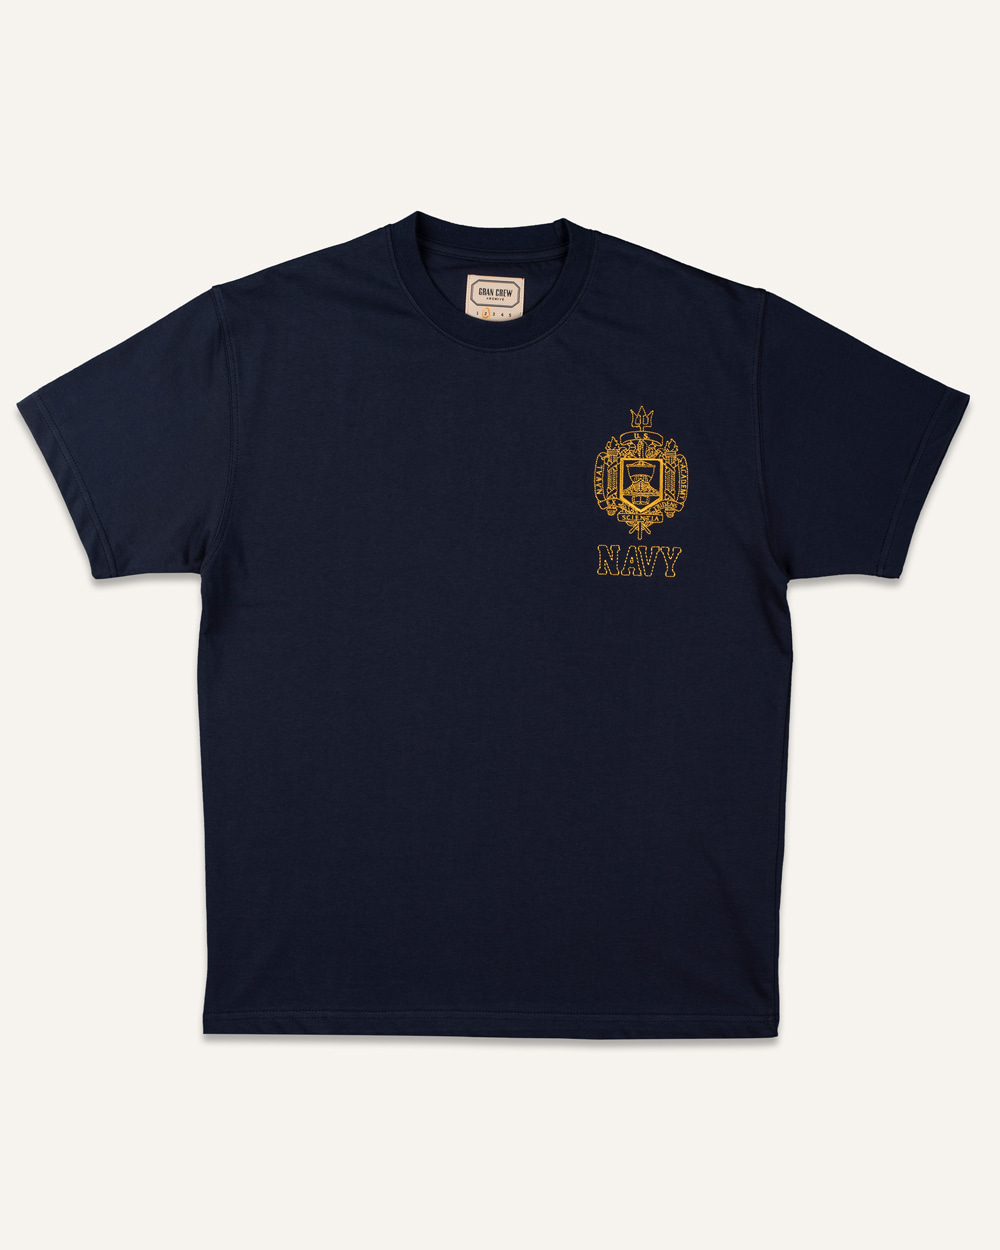 Naval Academy T-shirt(Navy)GRAN CREW(그랑크루)